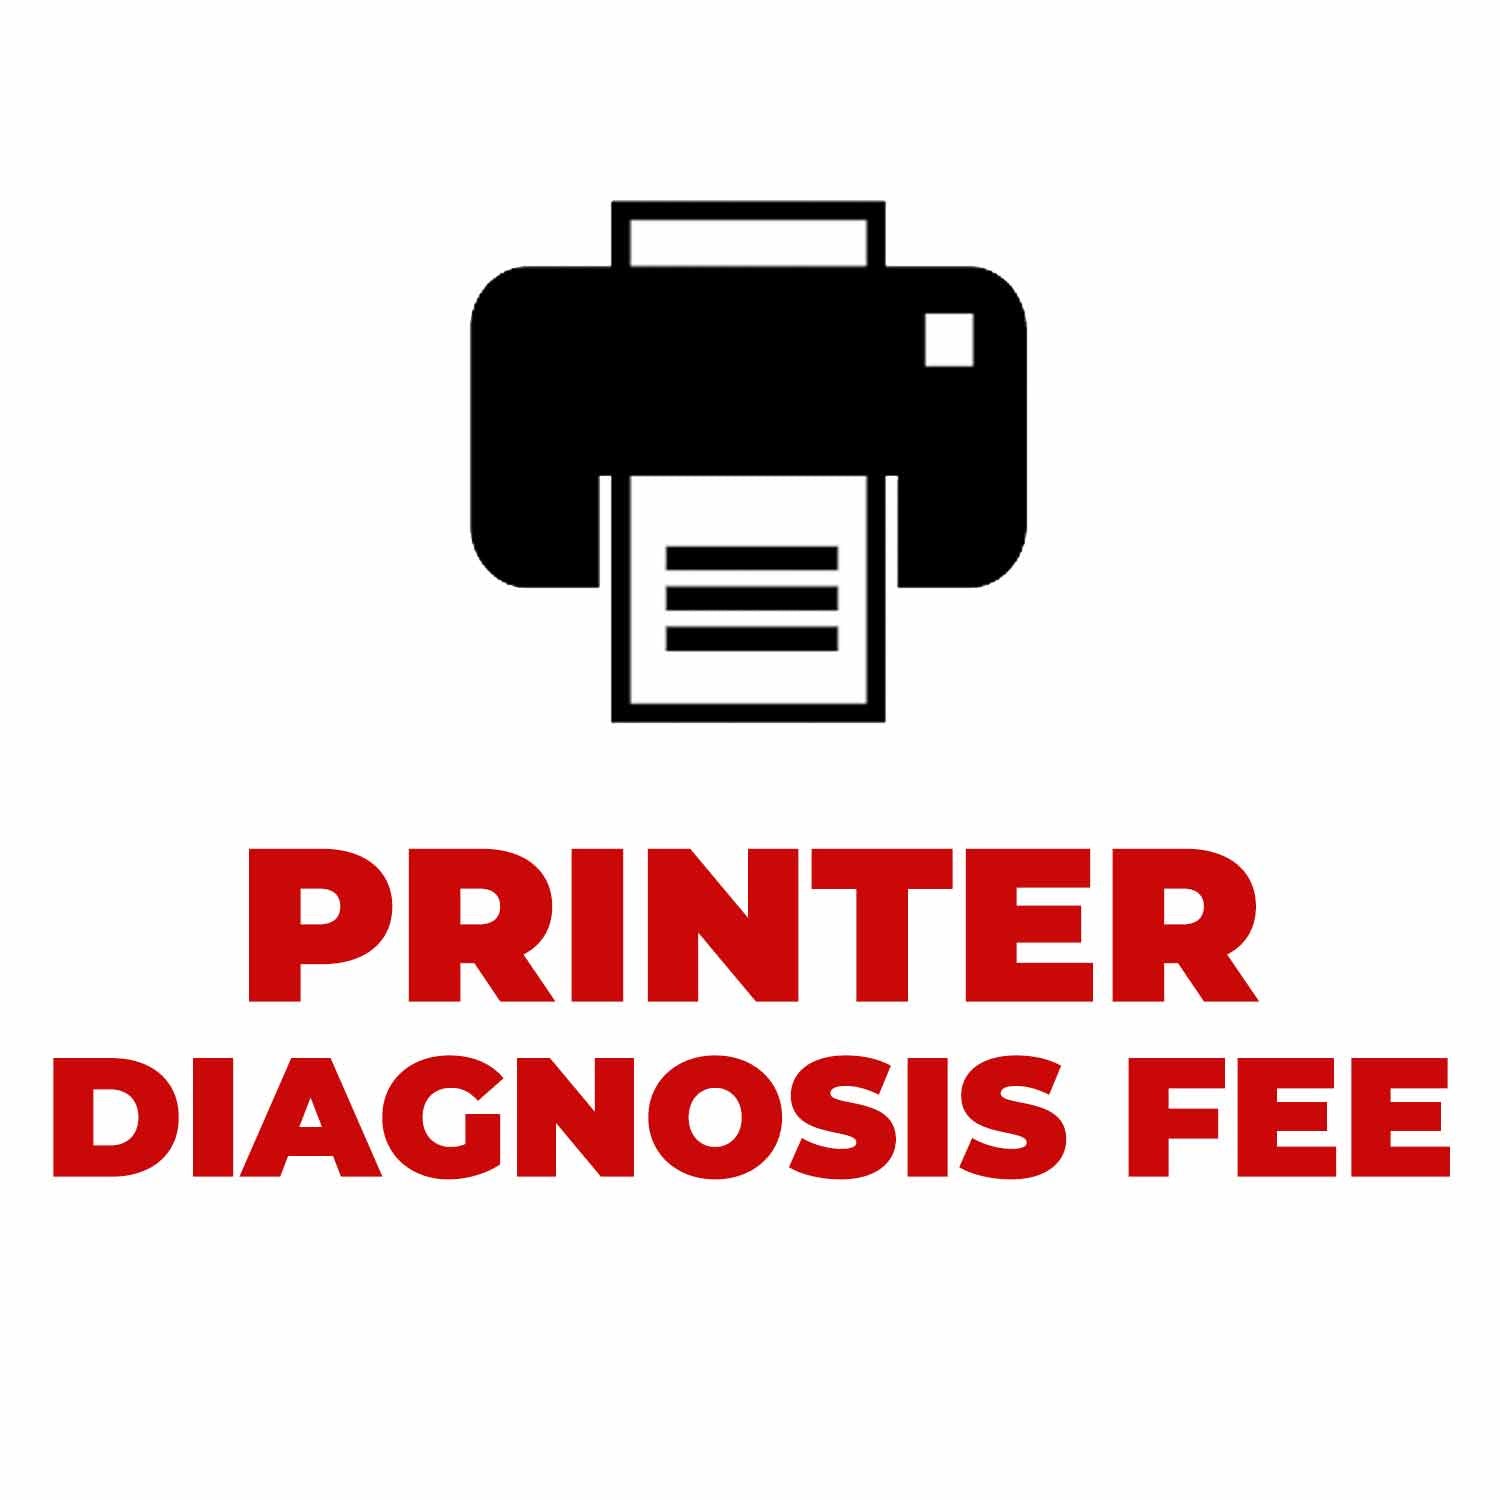 Diagnosis fee (Printer)